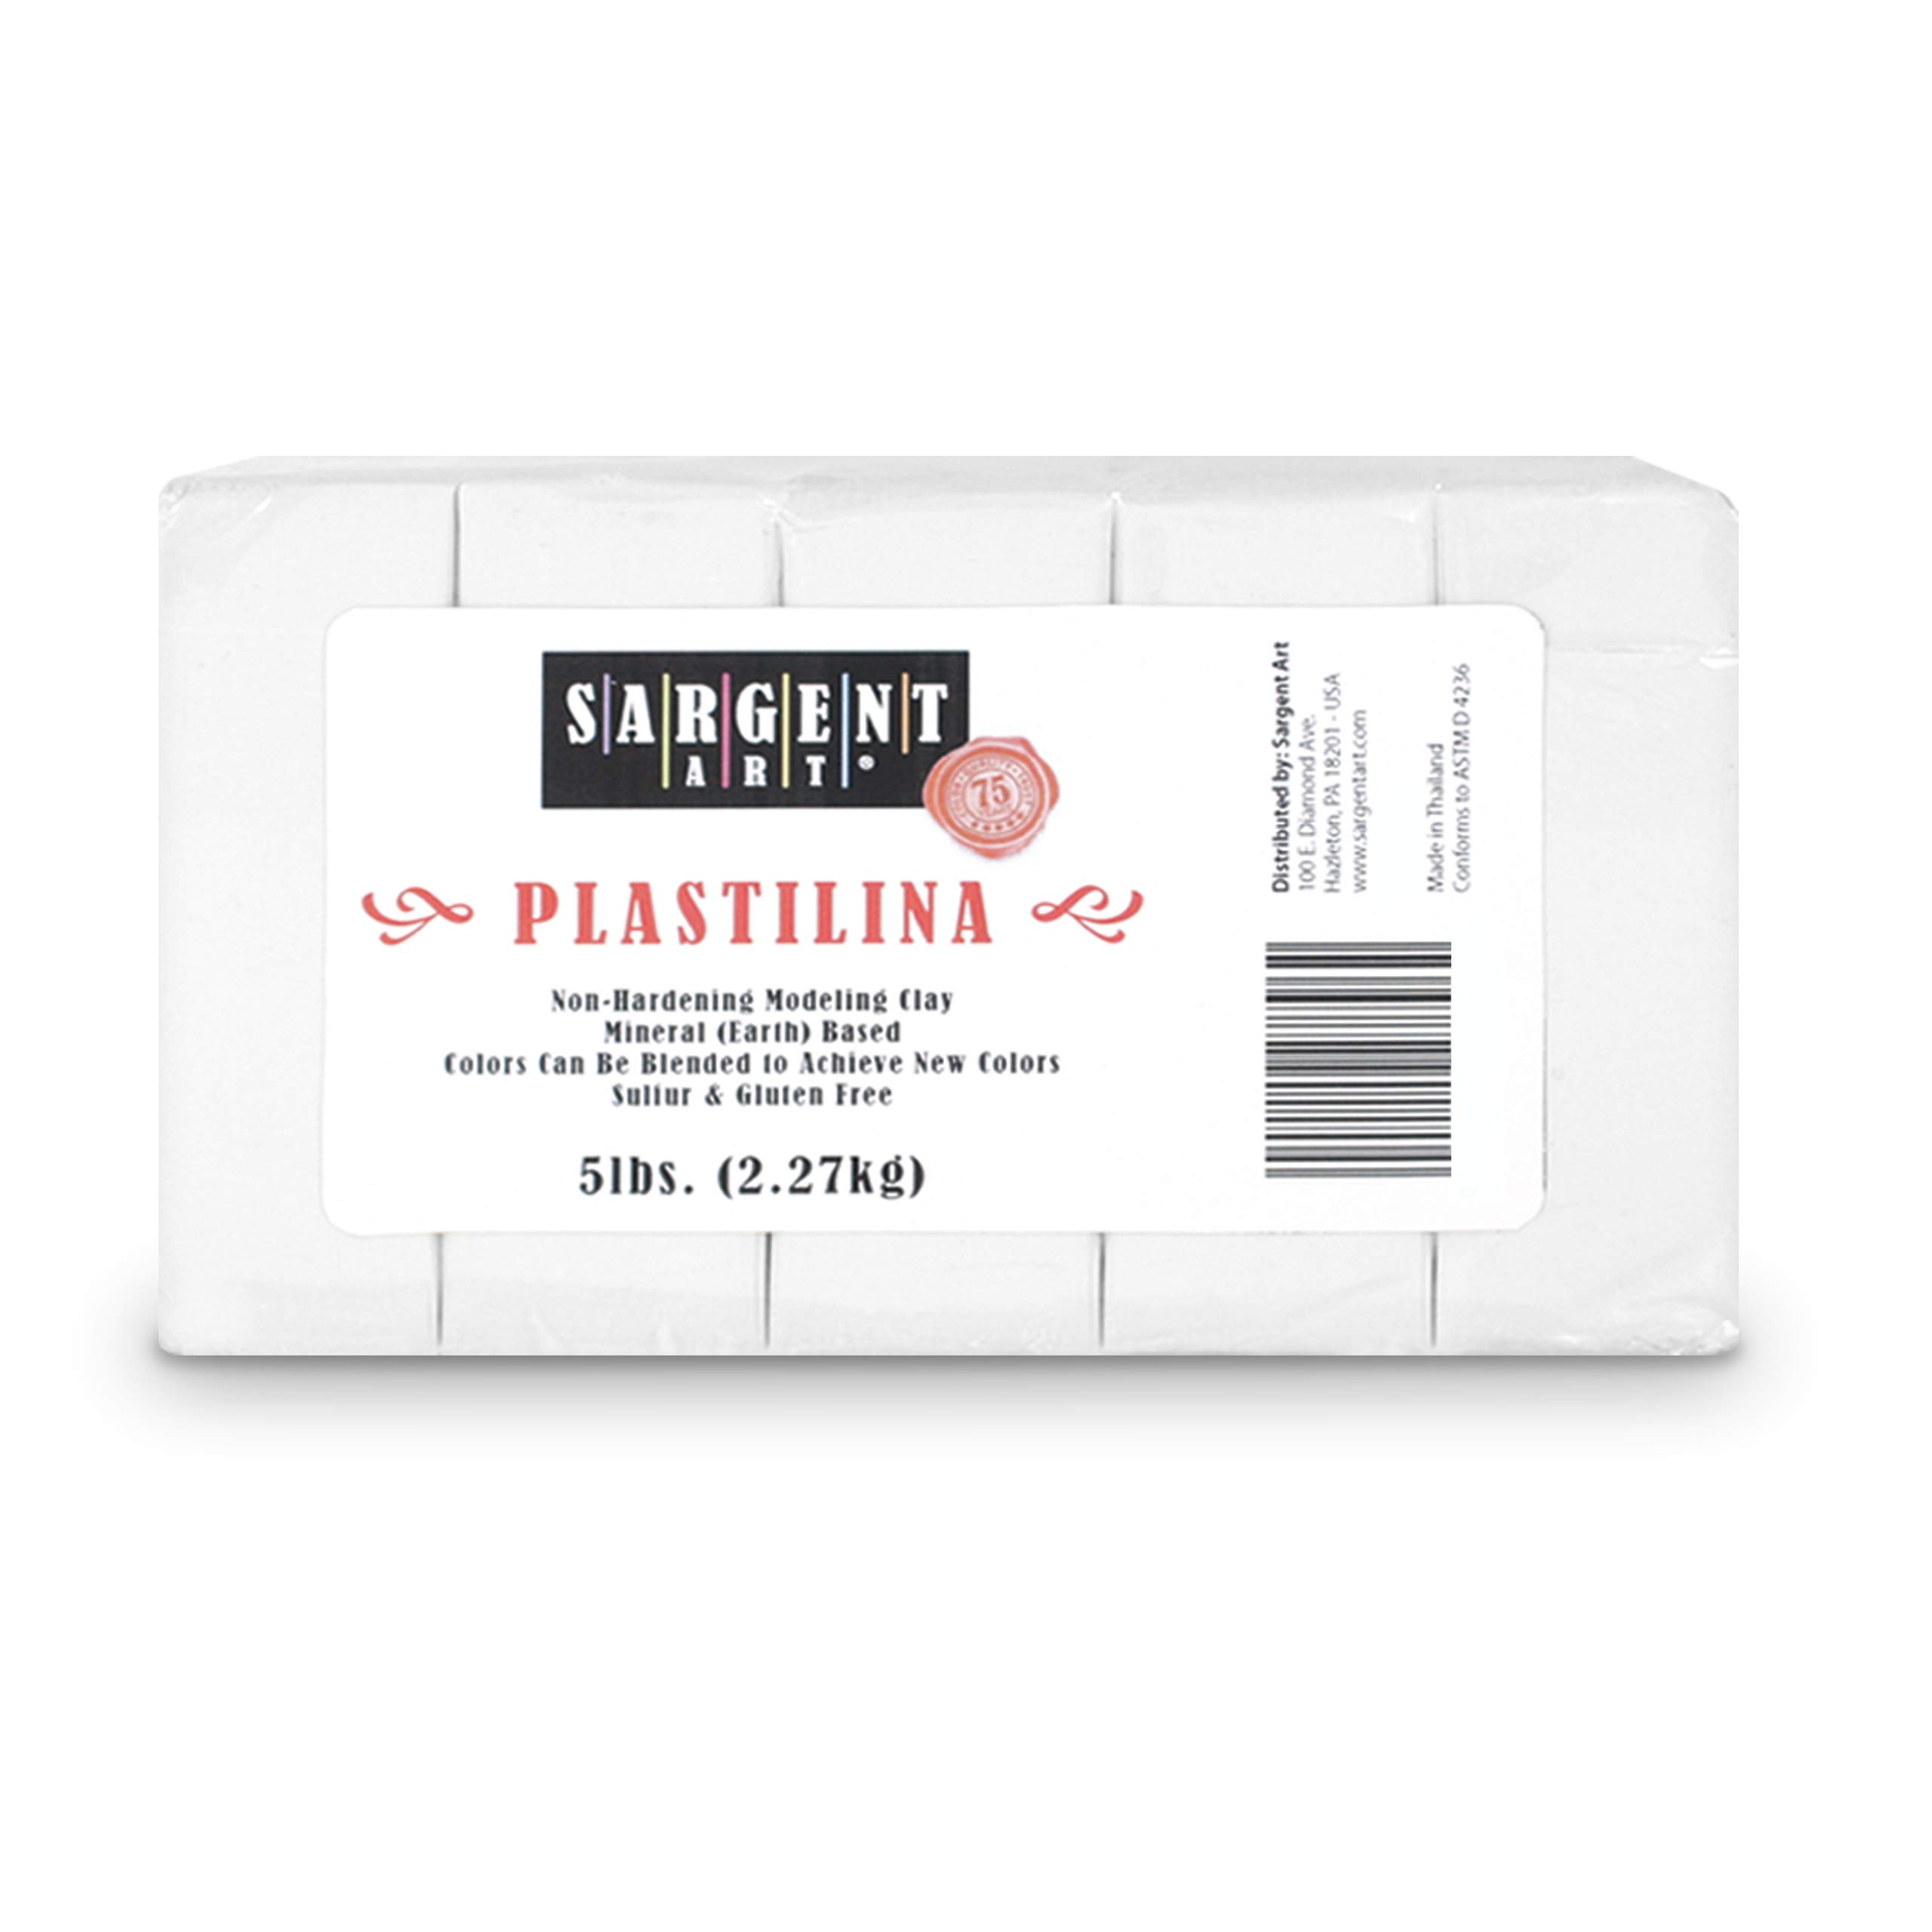 Sargent Art Plastilina Modeling Clay White 5 Pound Non-Hardening Long  Lasting & Non-Toxic Great